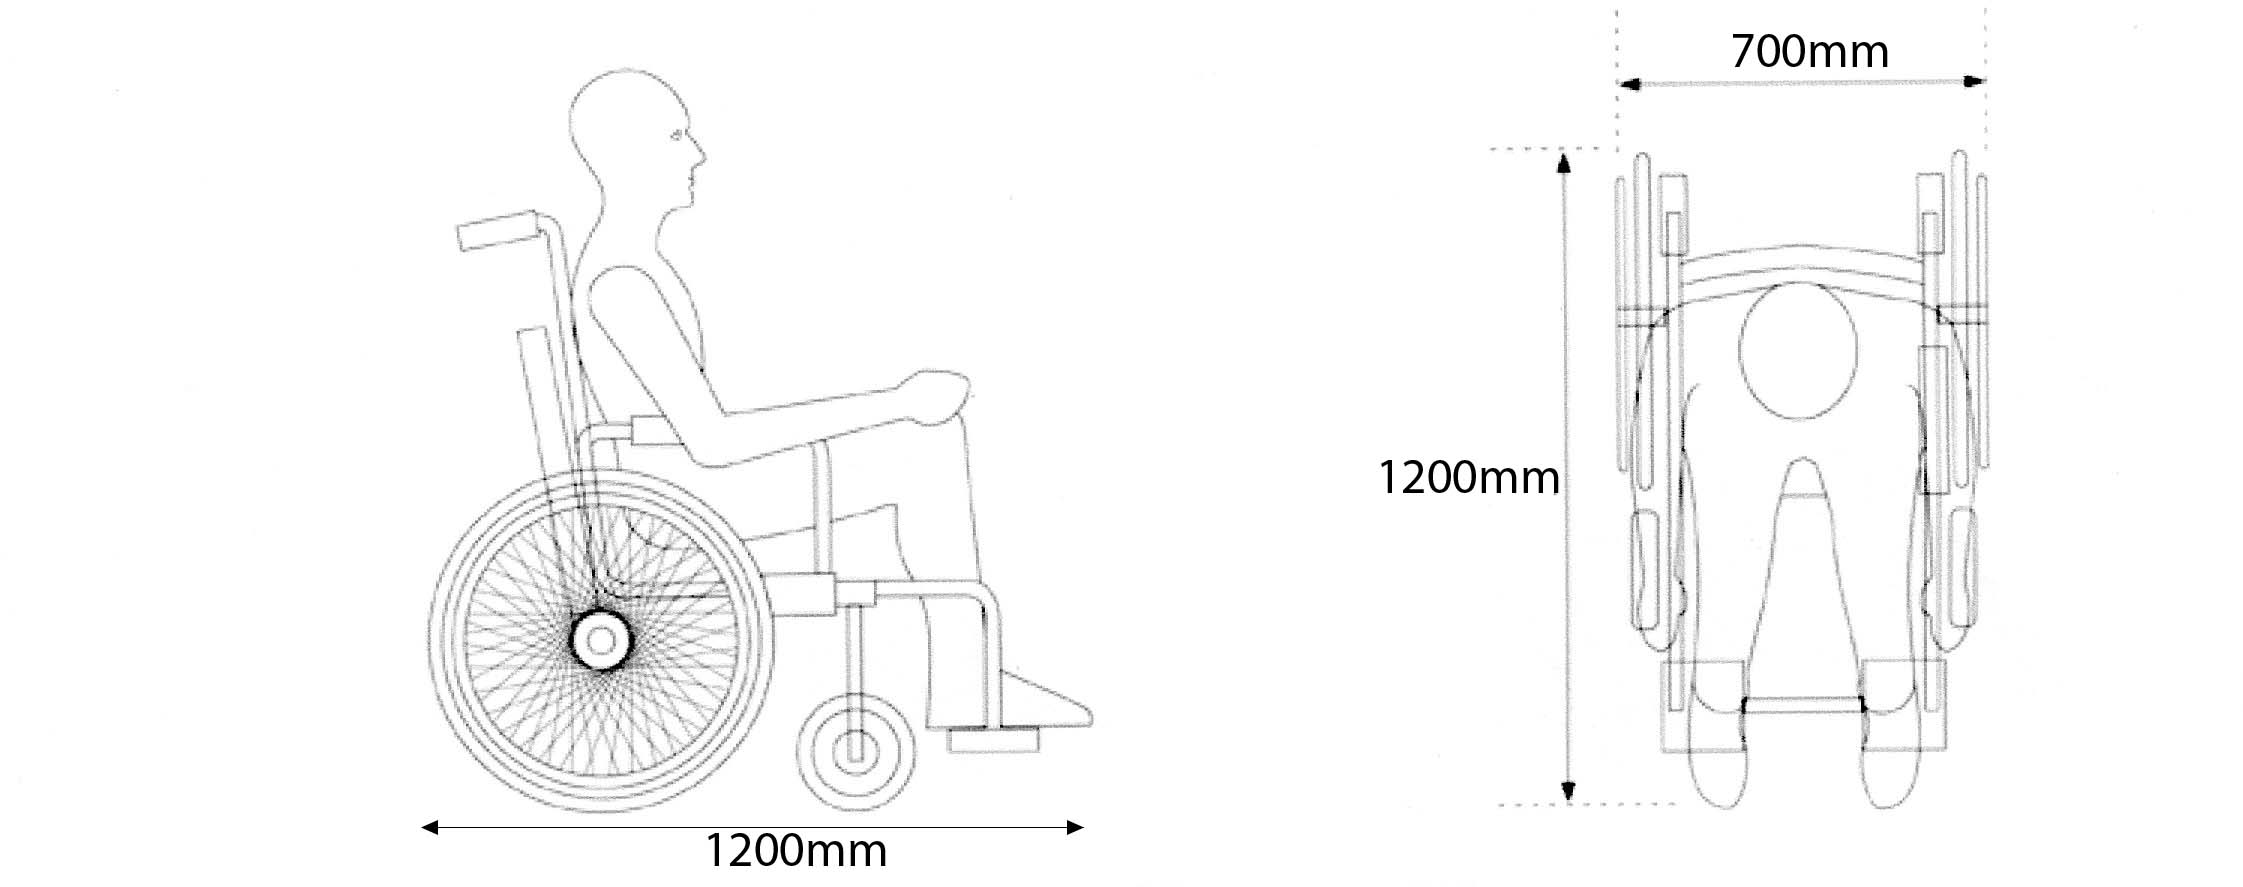 Wheelchair Image